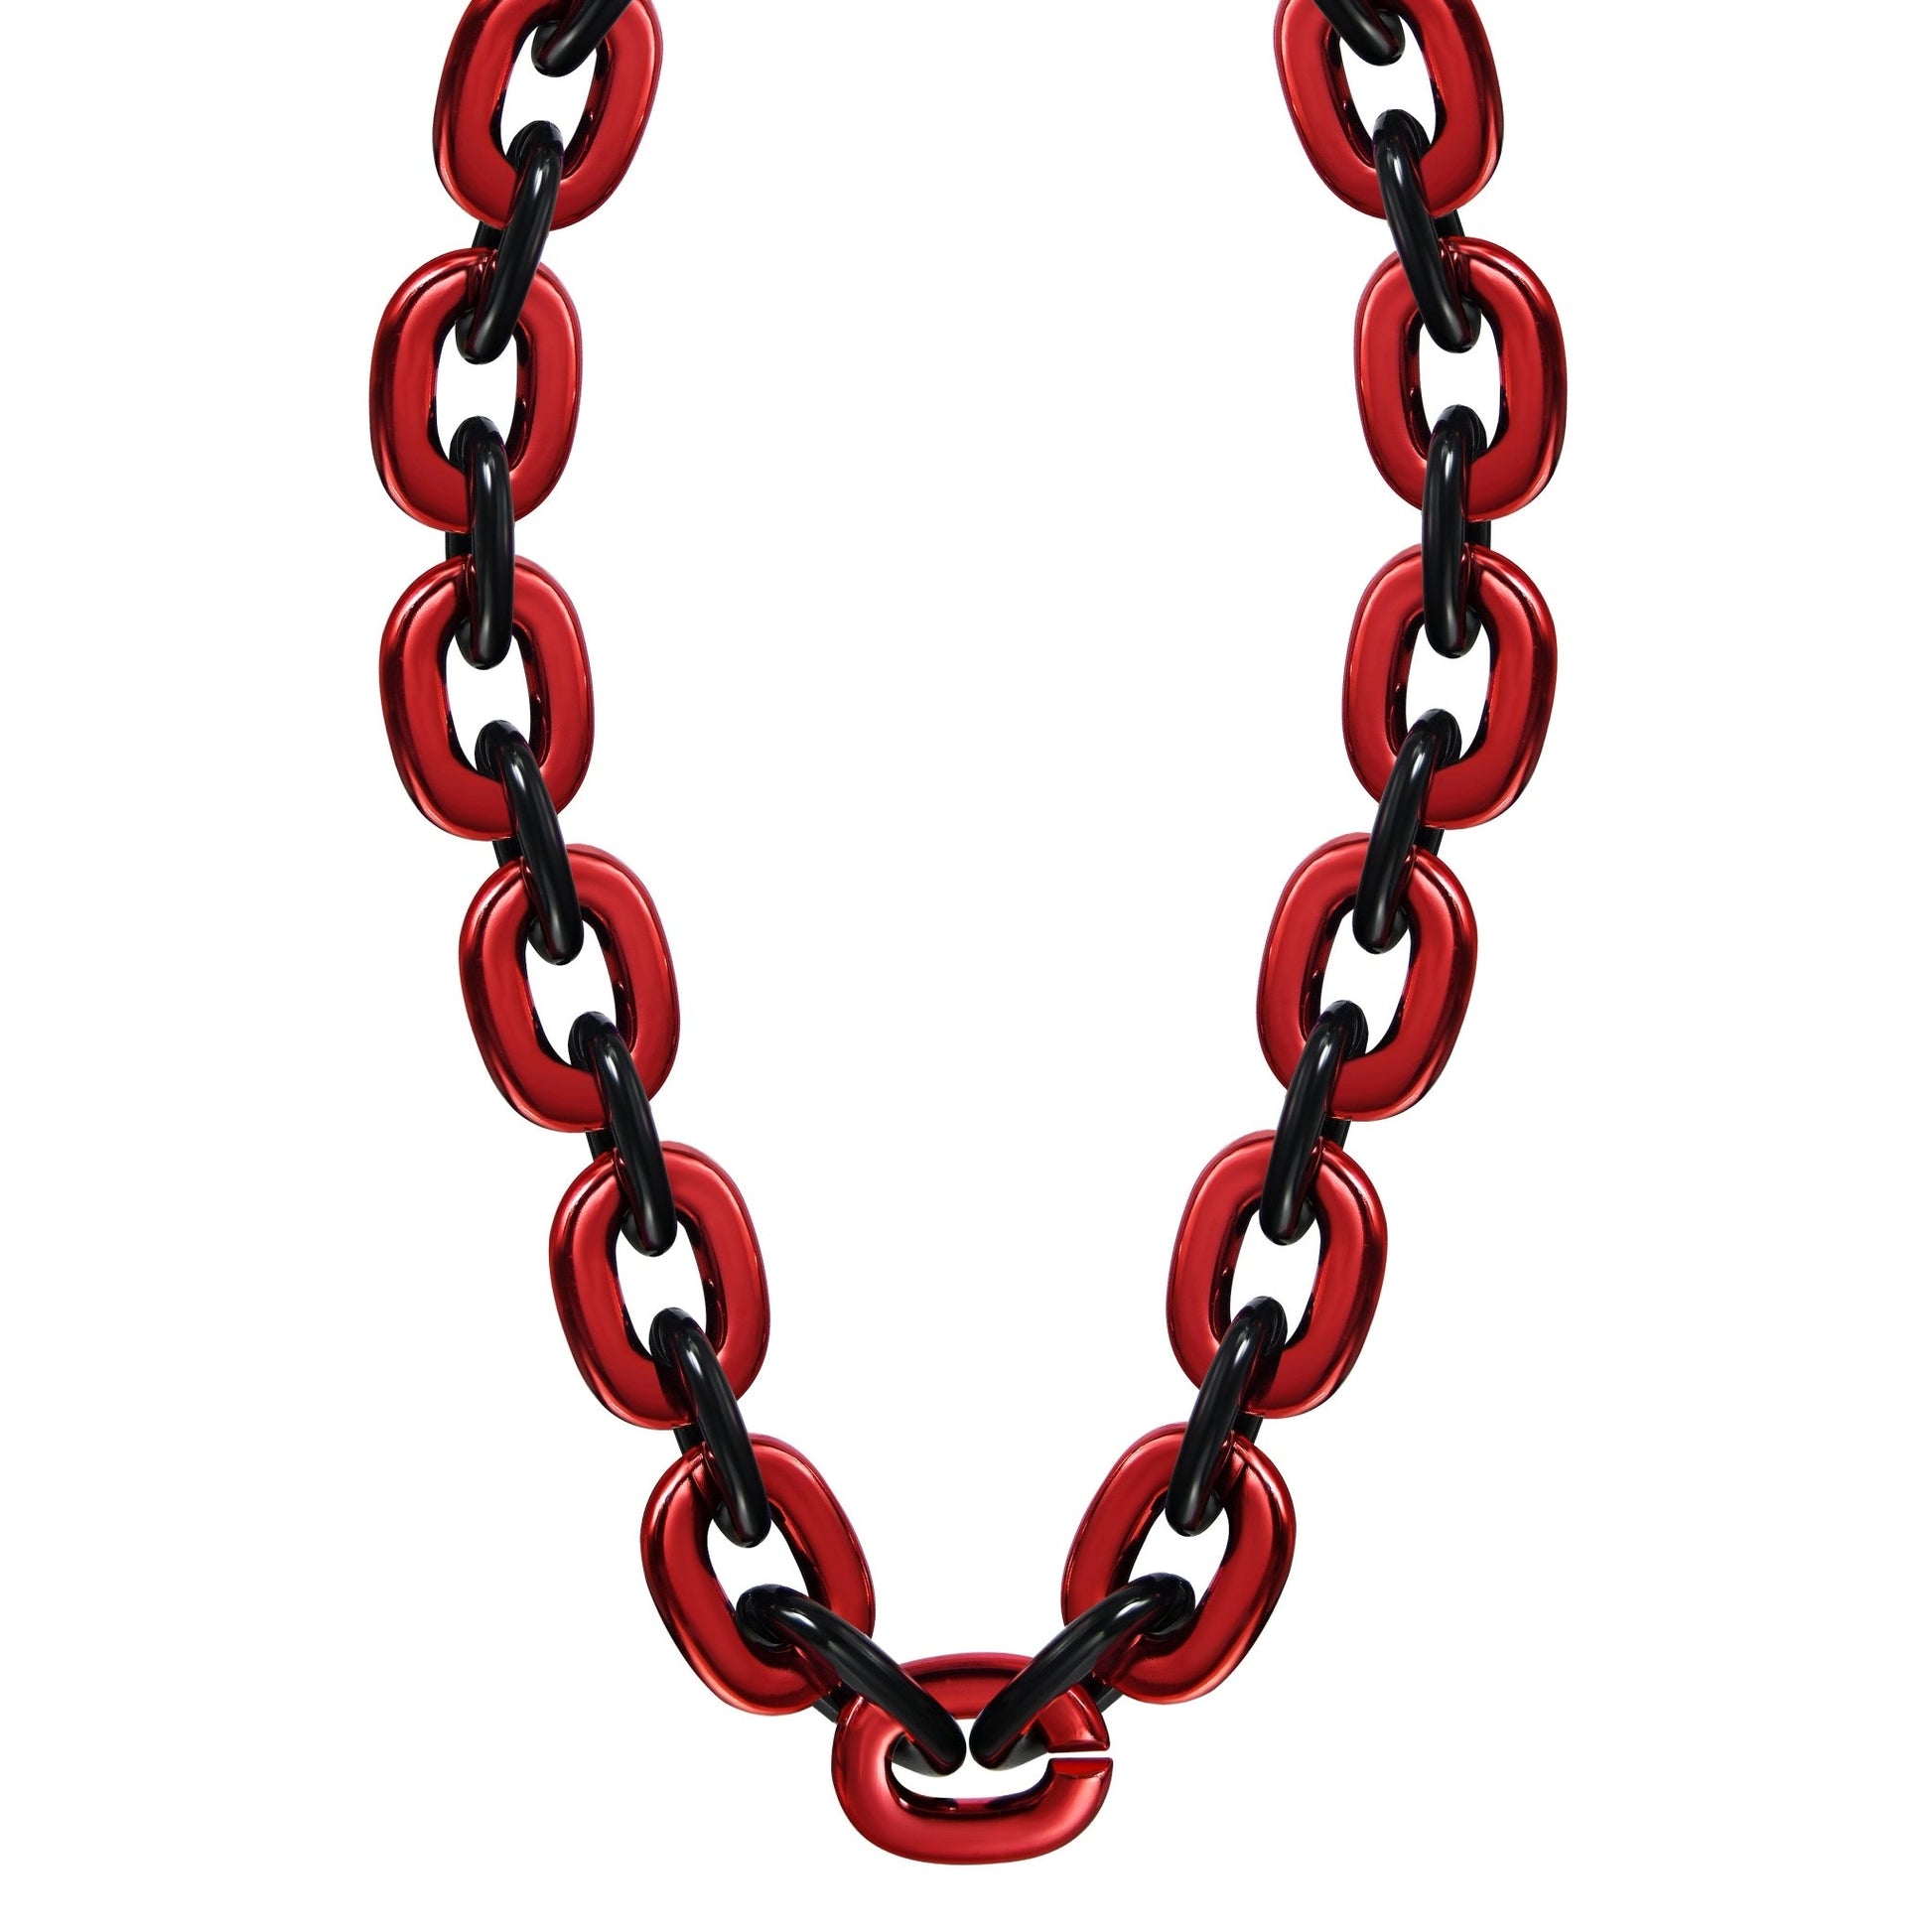 Jumbo Fan Chain Necklace - Gamedays Gear - Red / Black